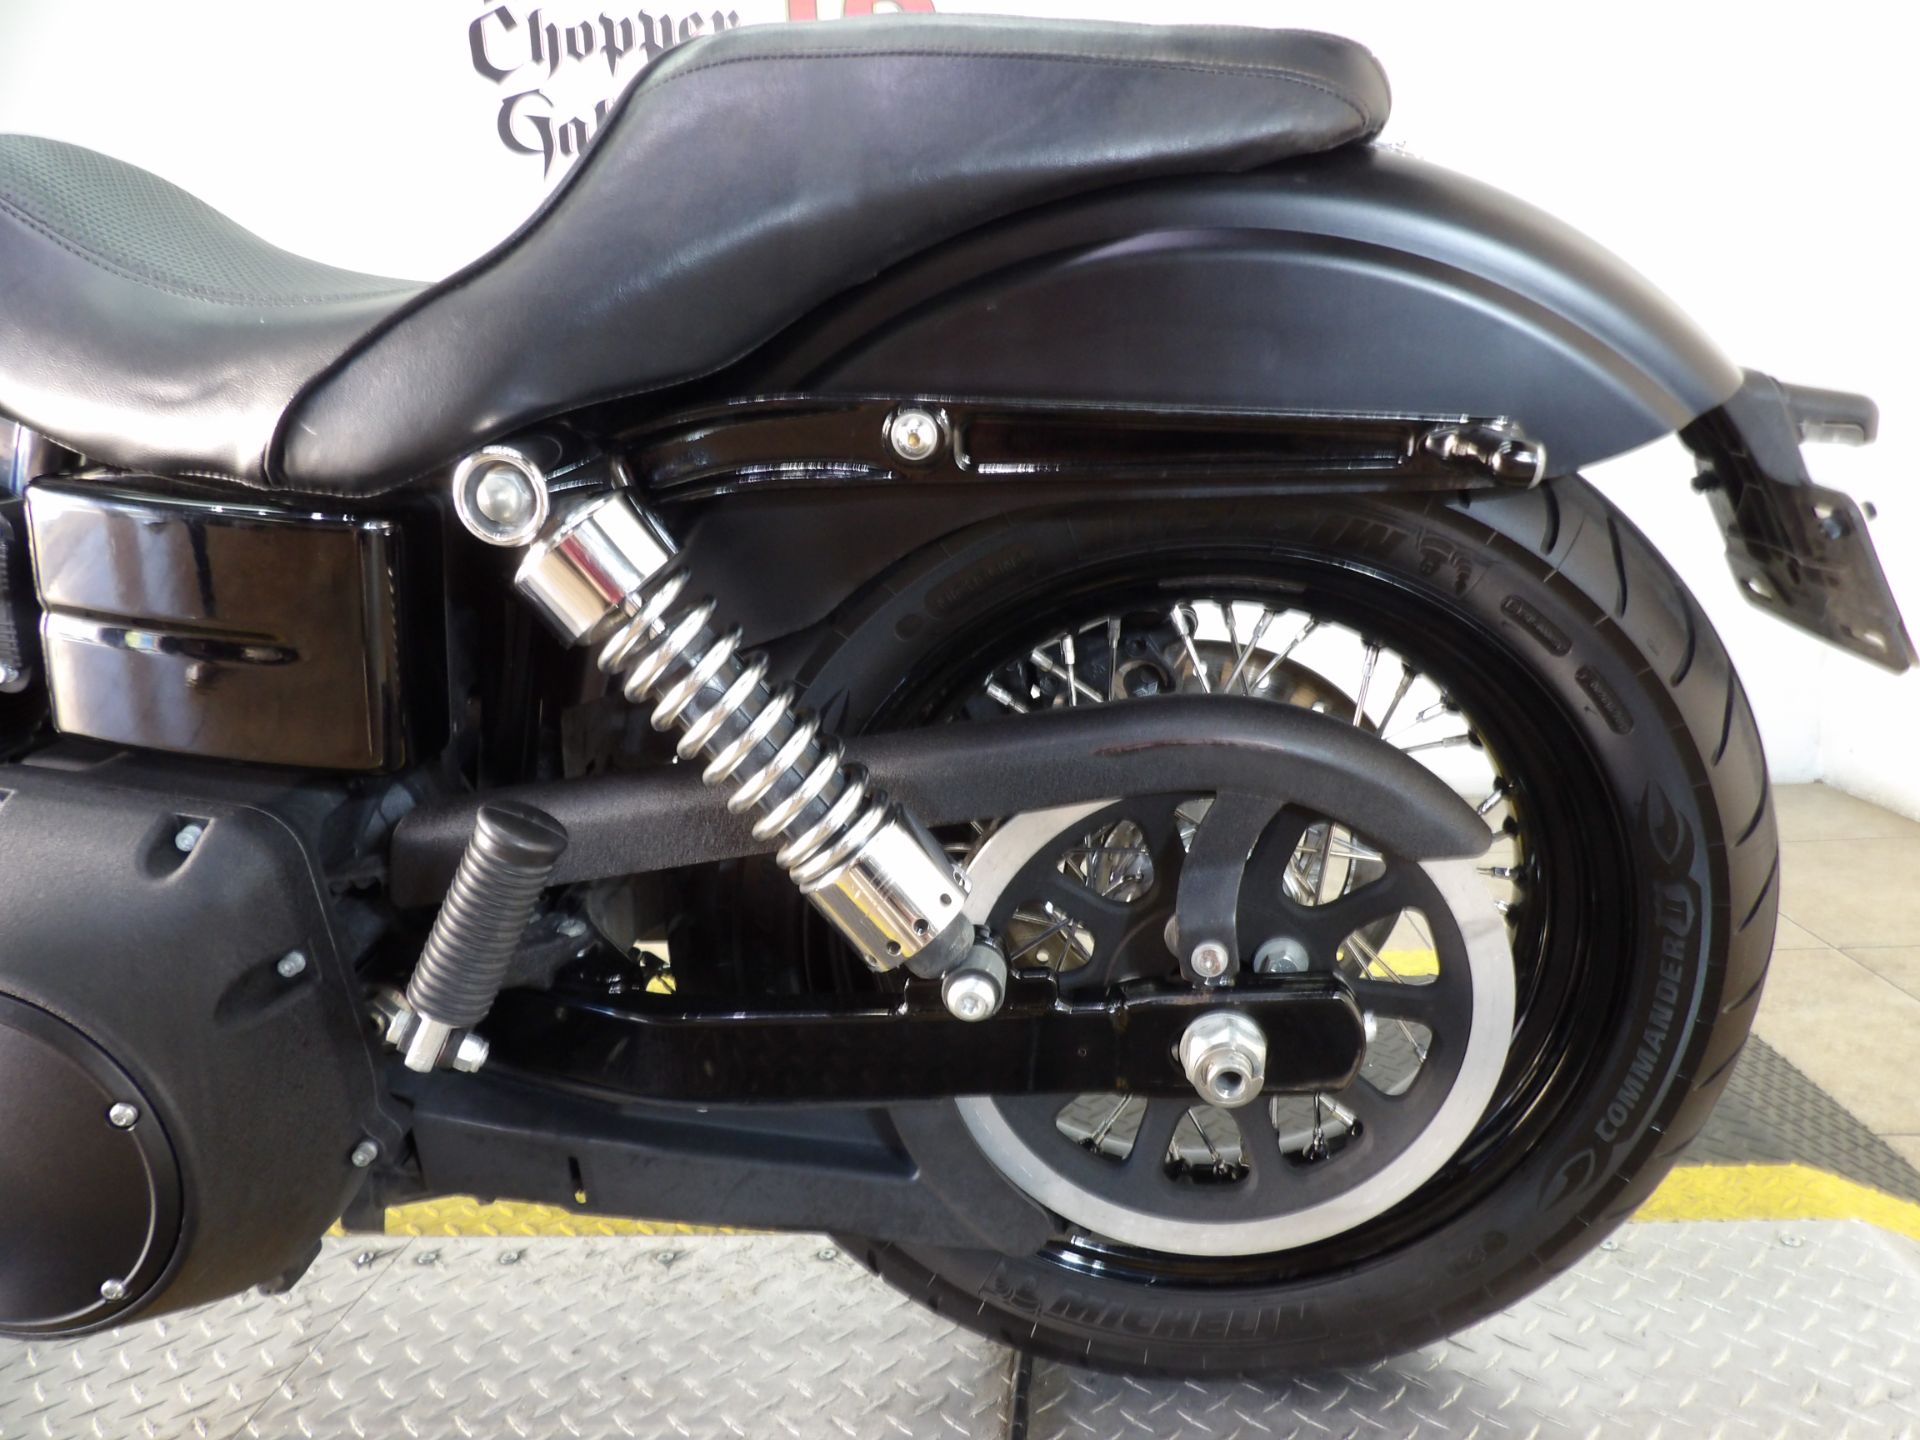 2013 Harley-Davidson Dyna® Street Bob® in Temecula, California - Photo 30